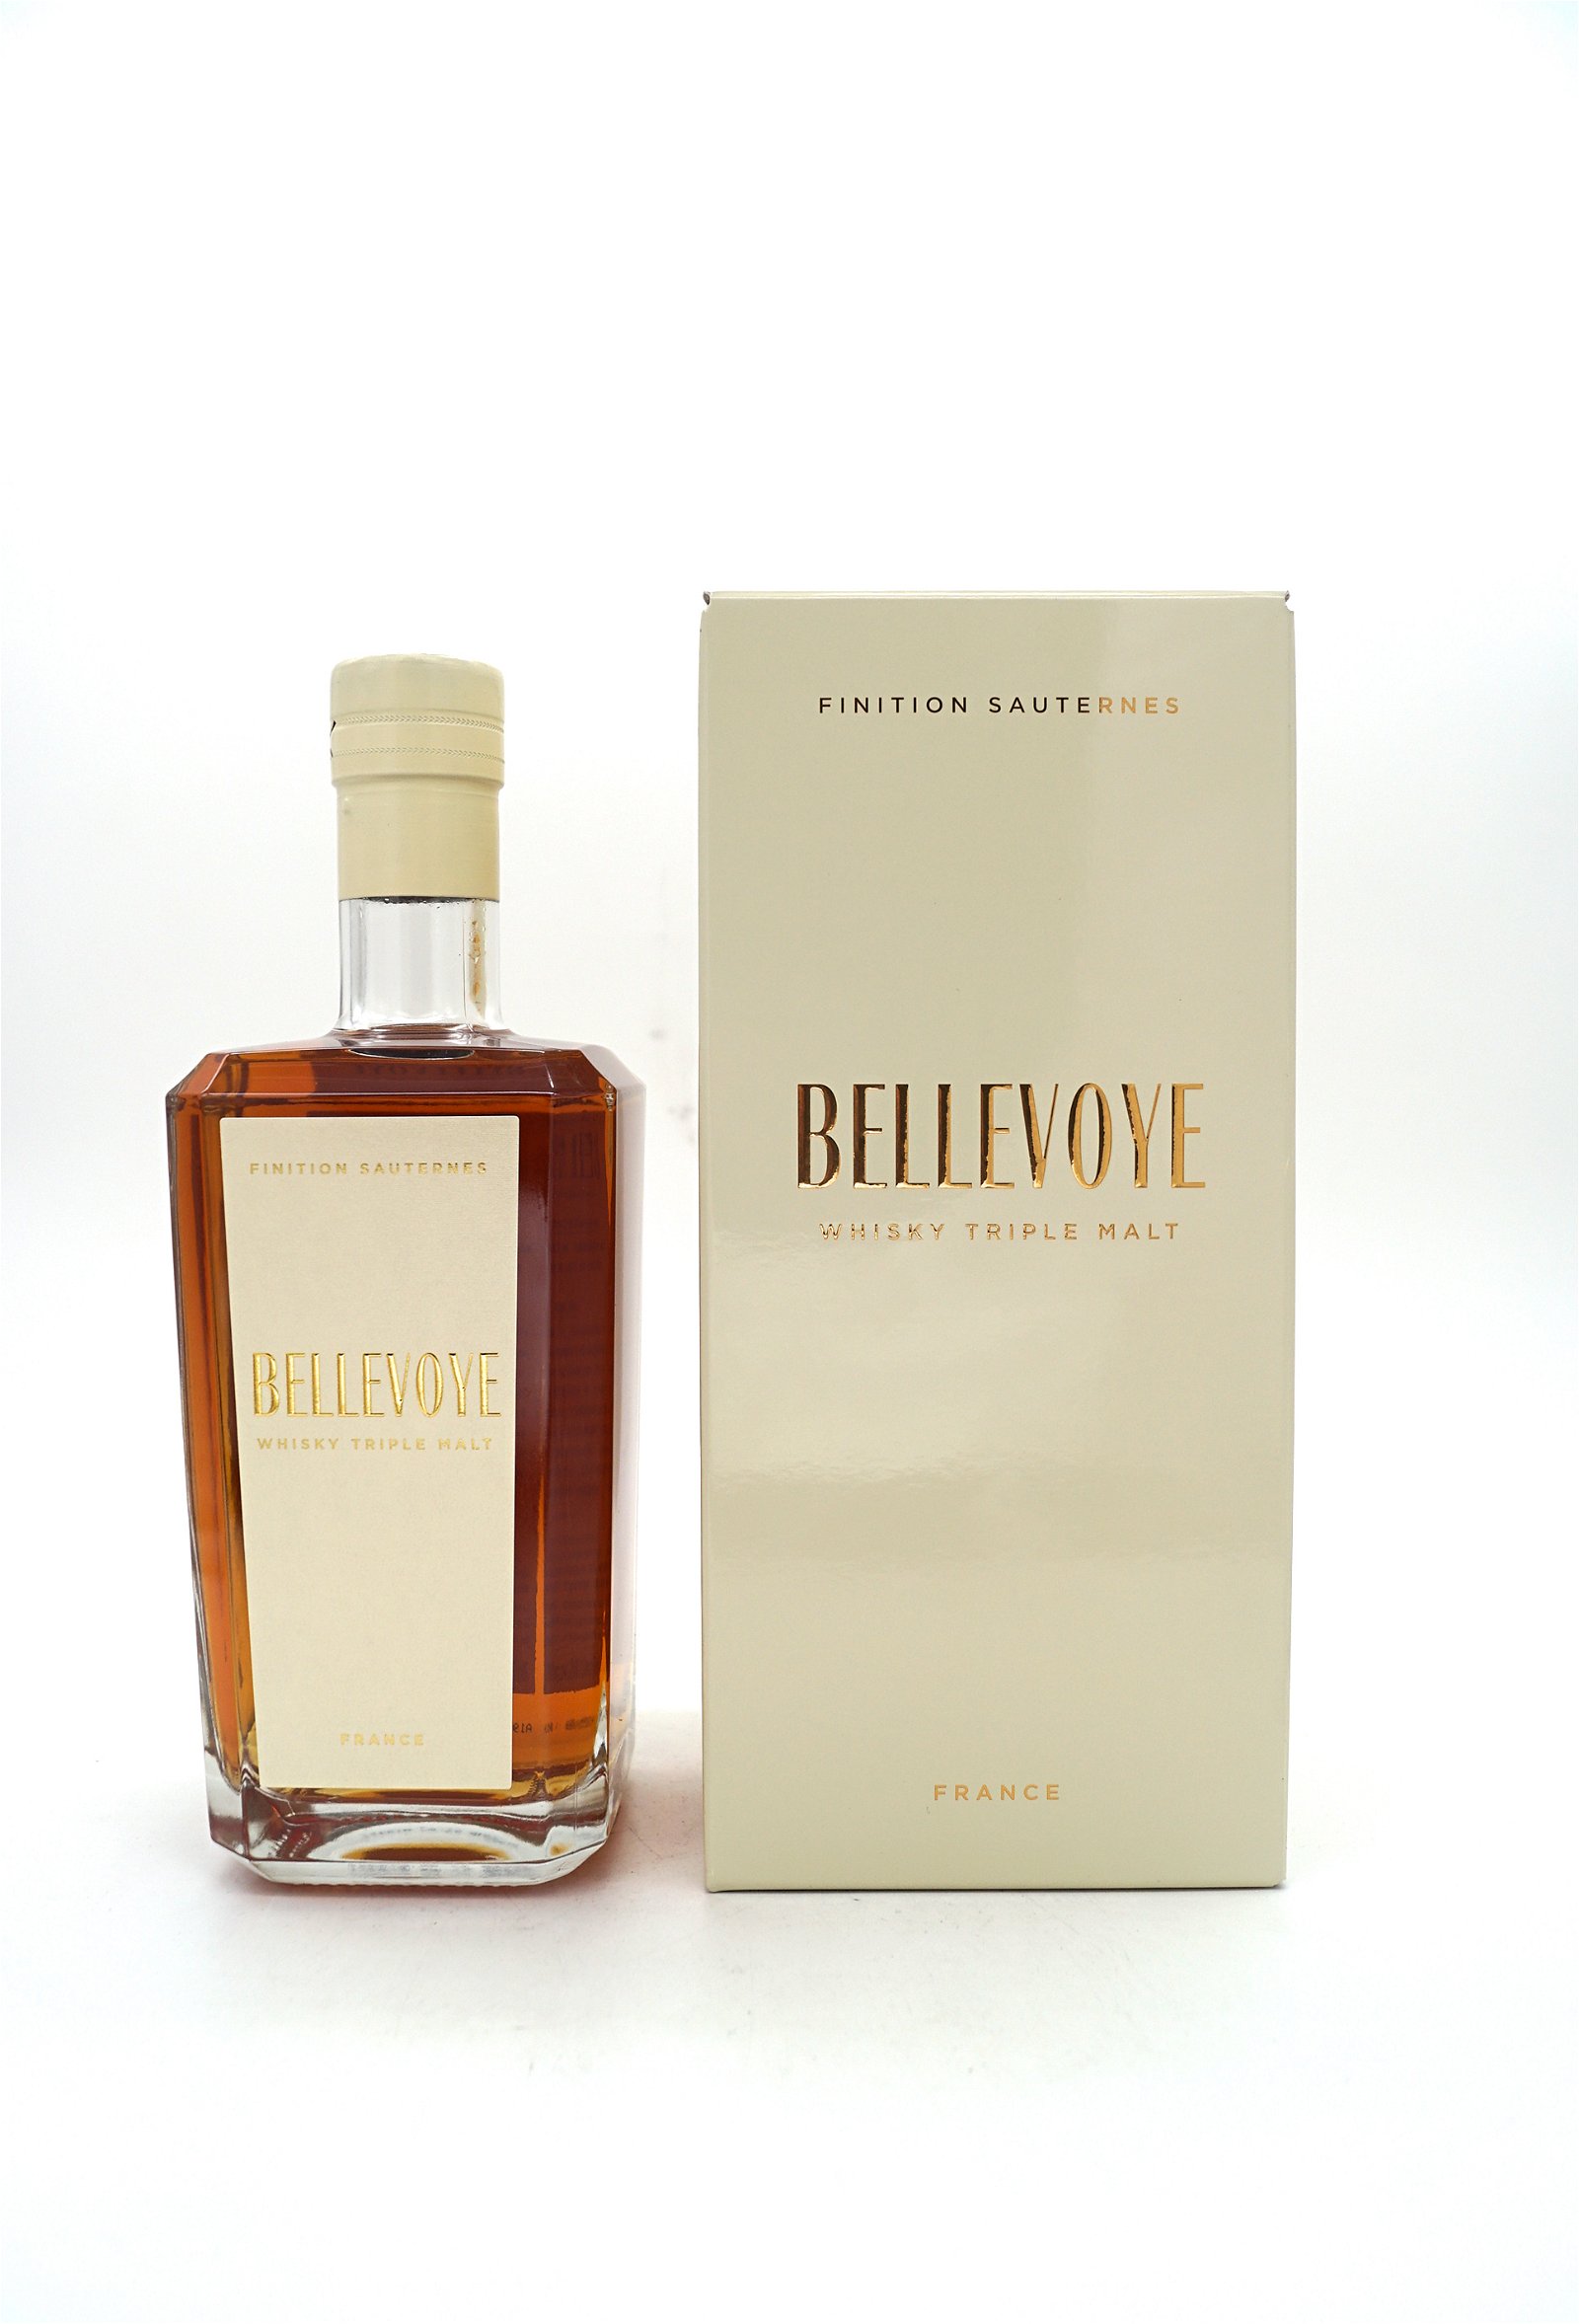 Bellevoye White Finition Sauternes Triple Malt Whisky de France